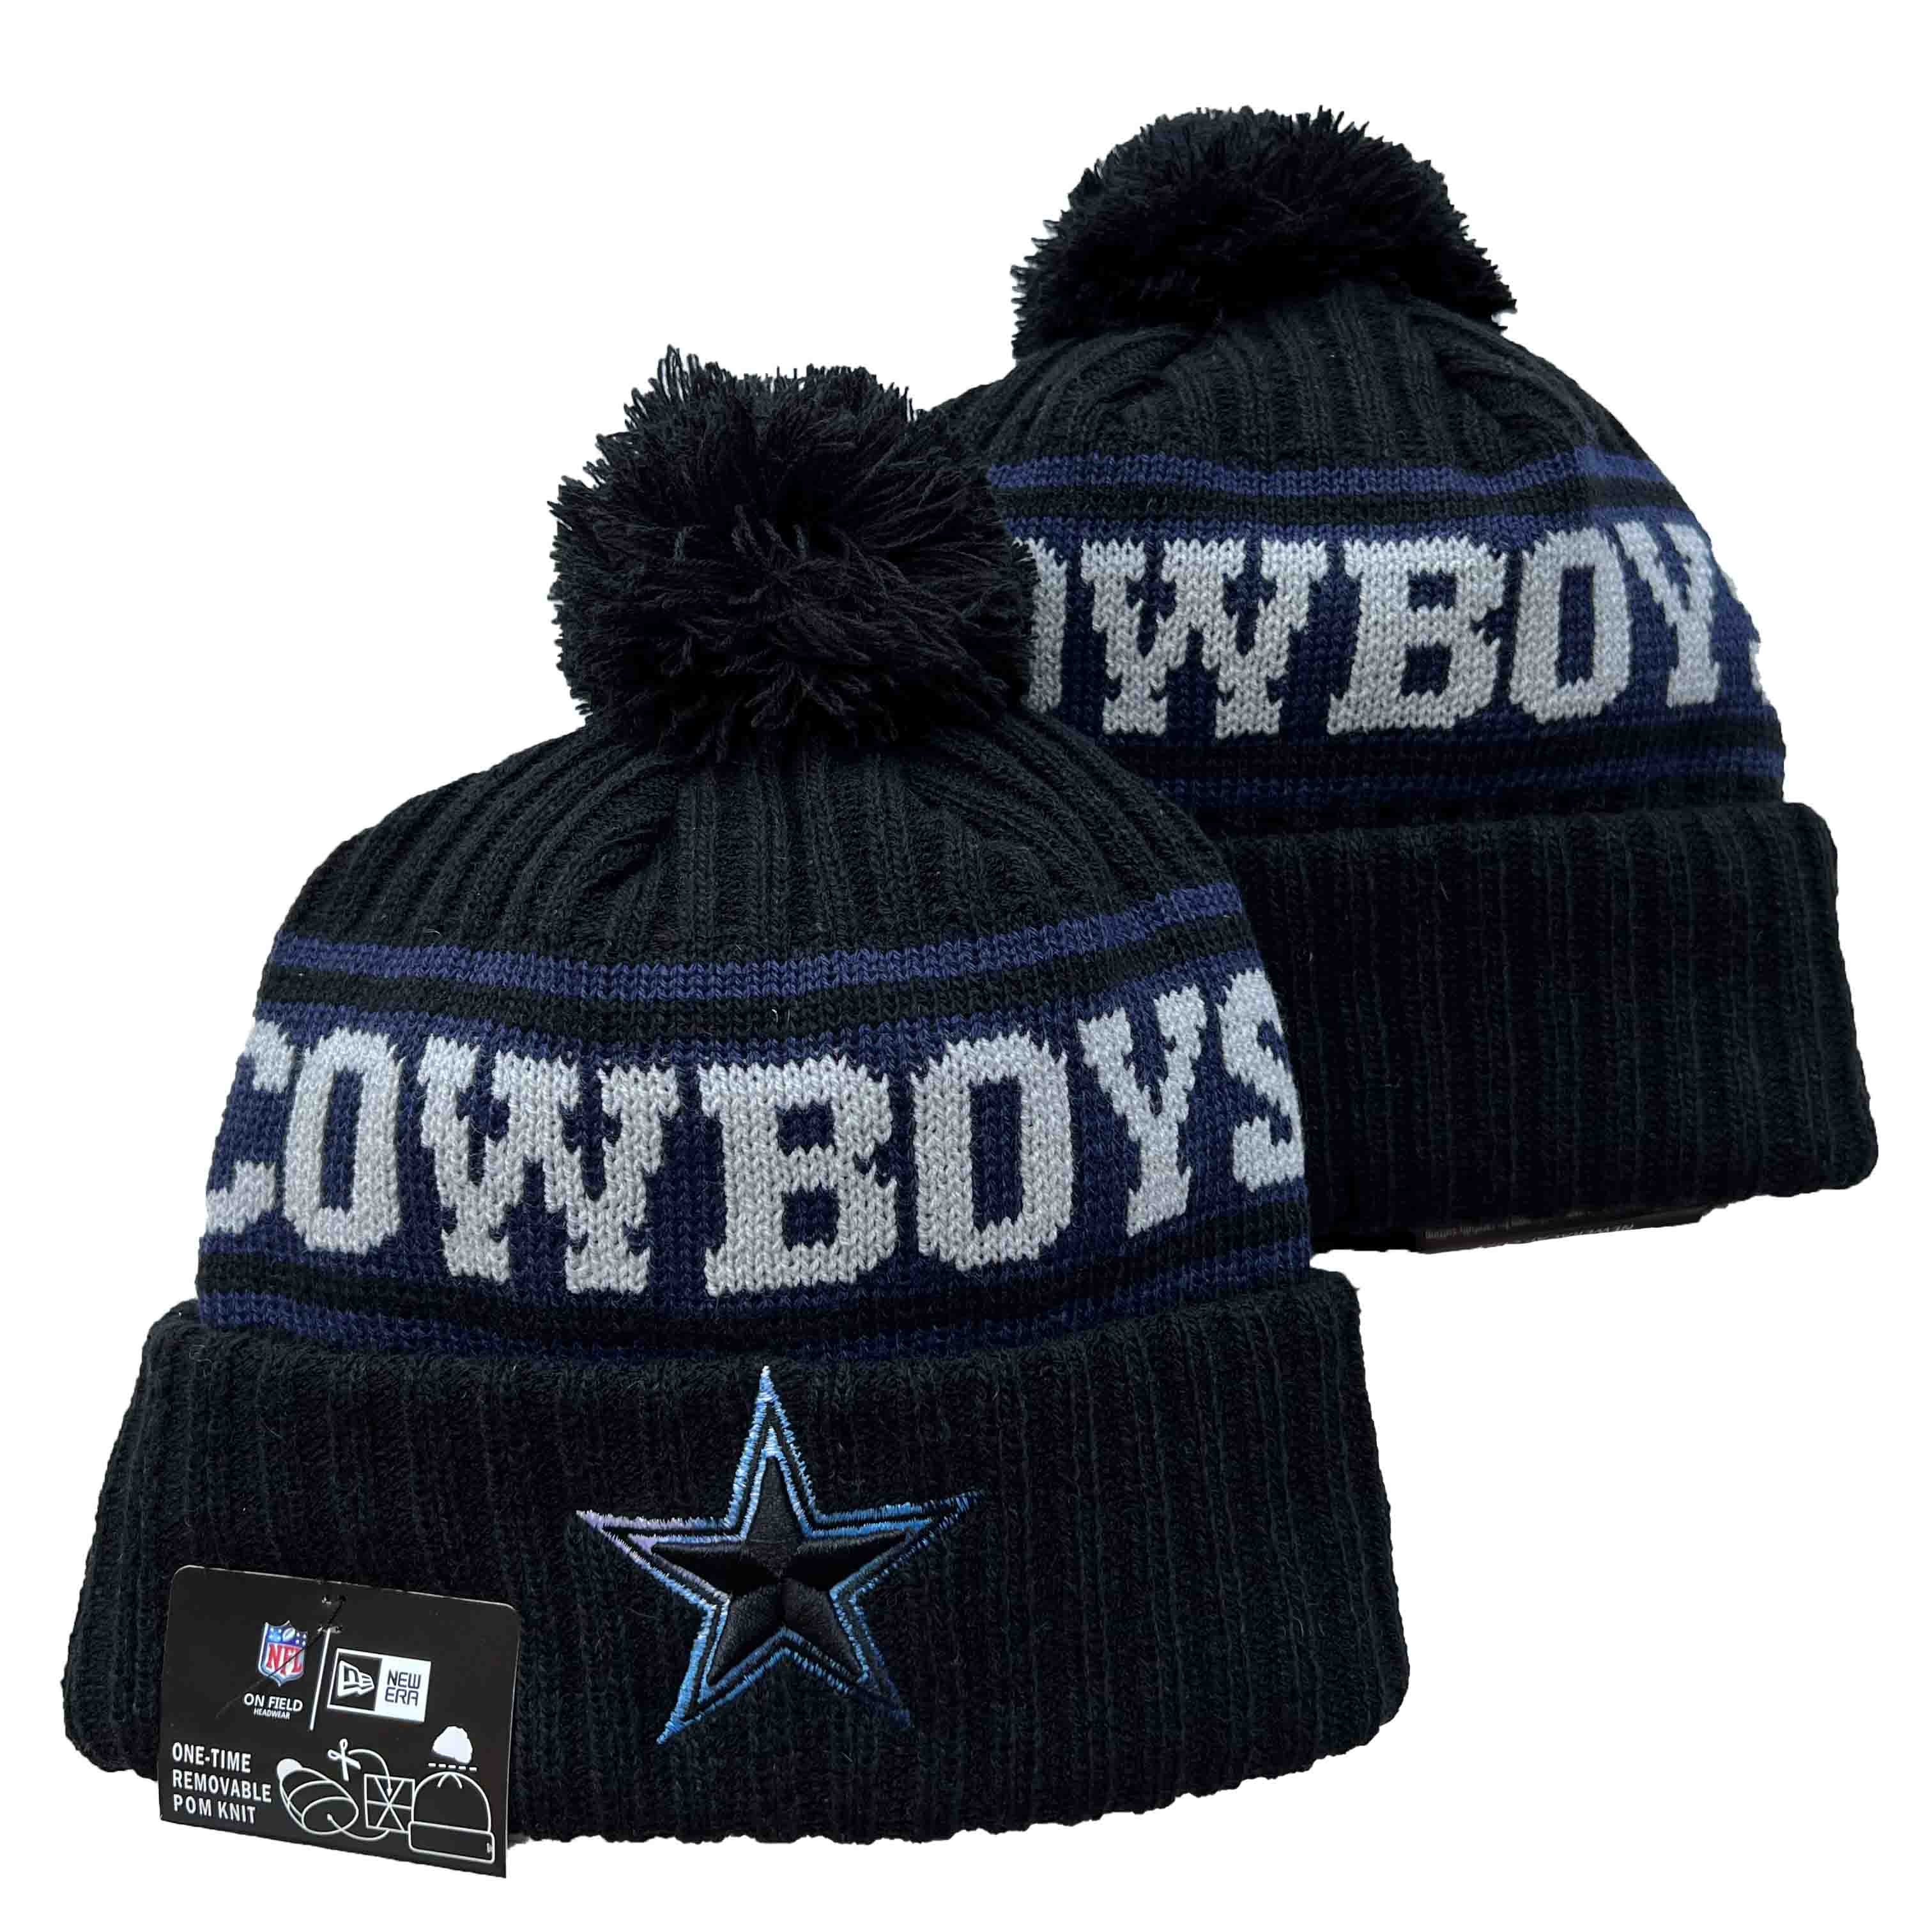 Dallas Cowboys Knit Hats 0192